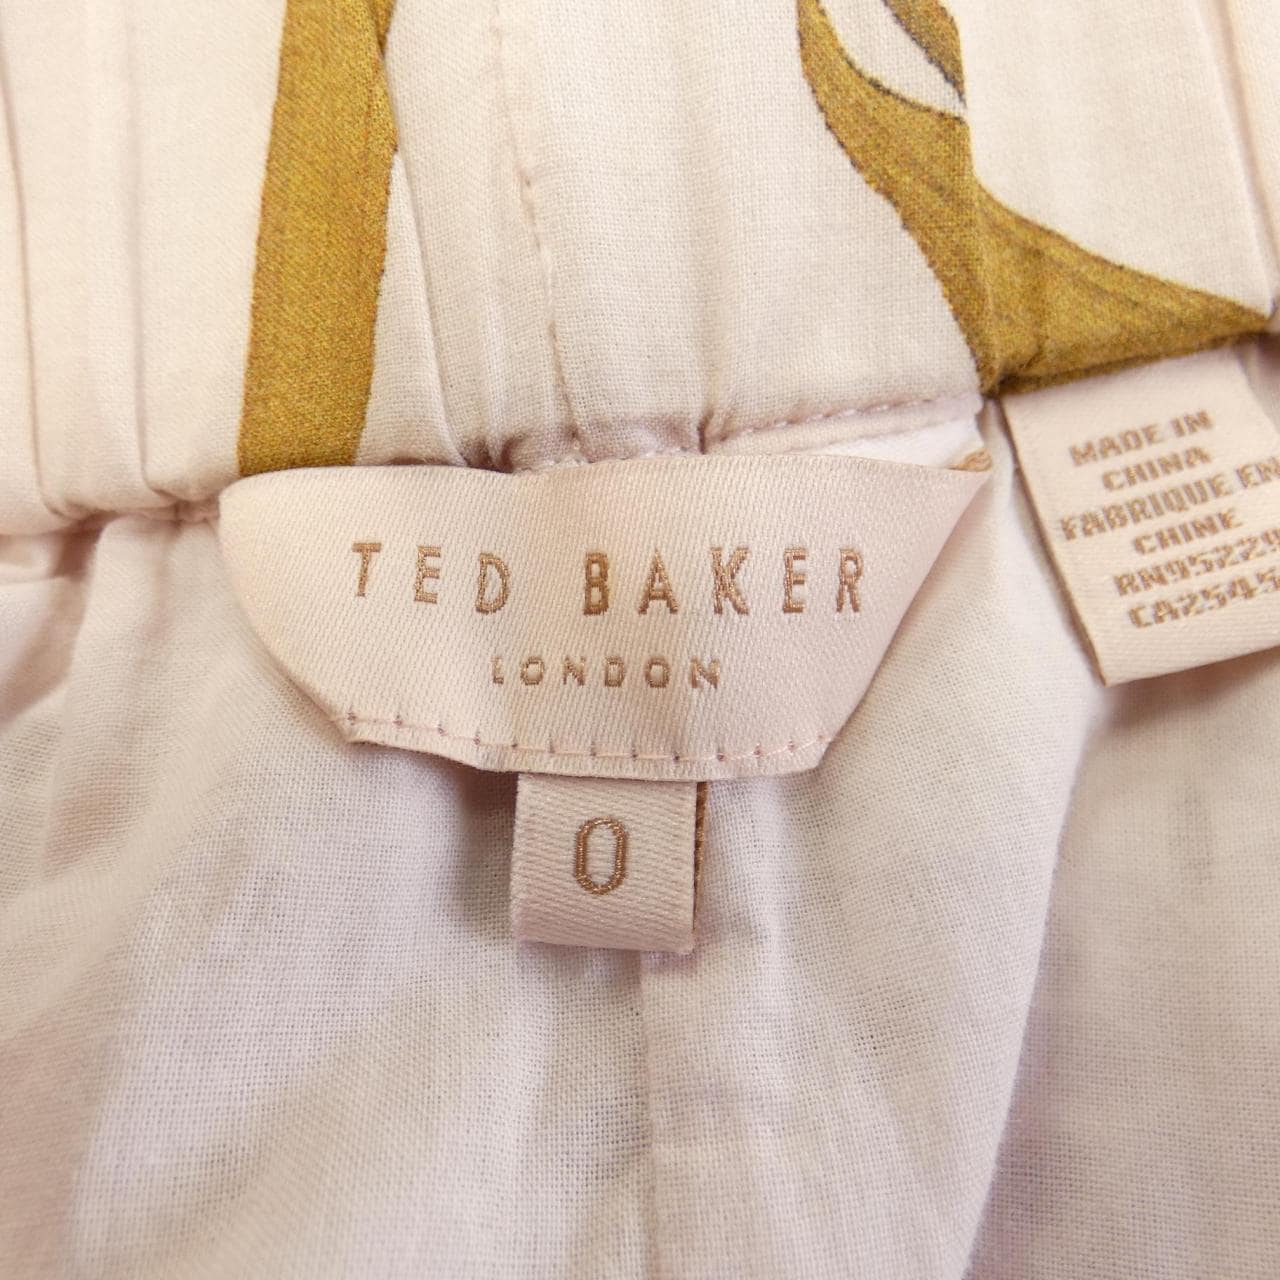 泰德贝克TED BAKER设置